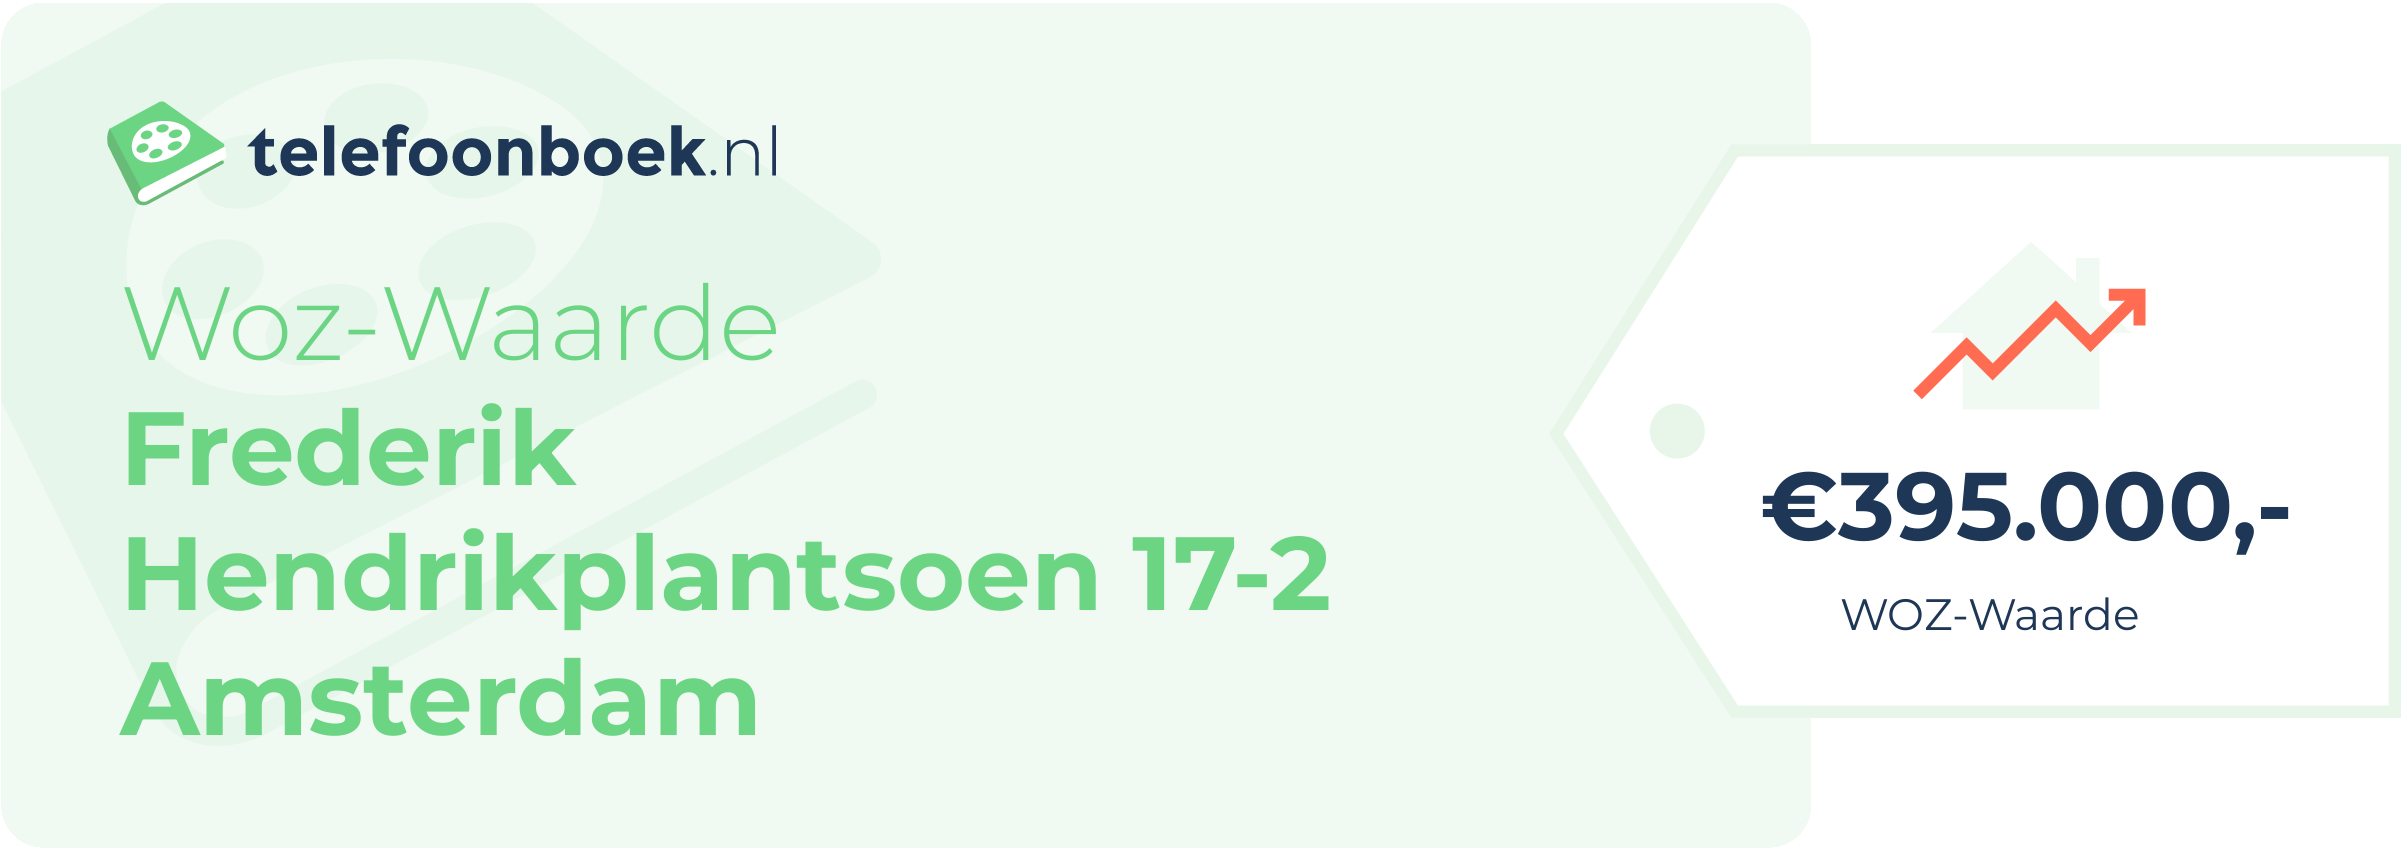 WOZ-waarde Frederik Hendrikplantsoen 17-2 Amsterdam